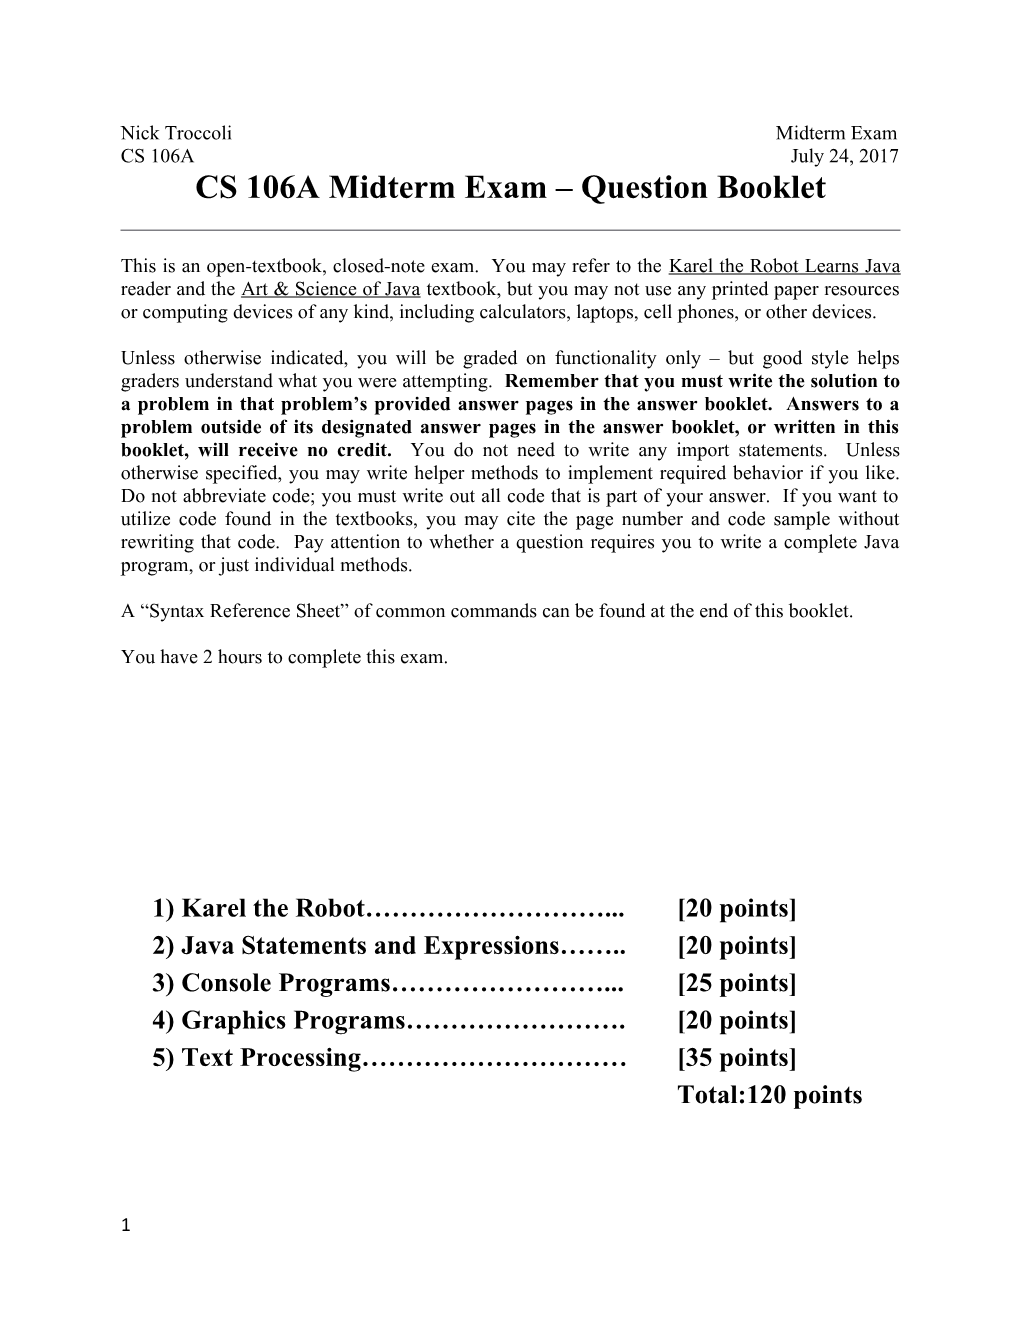 CS 106A Midterm Exam Question Booklet